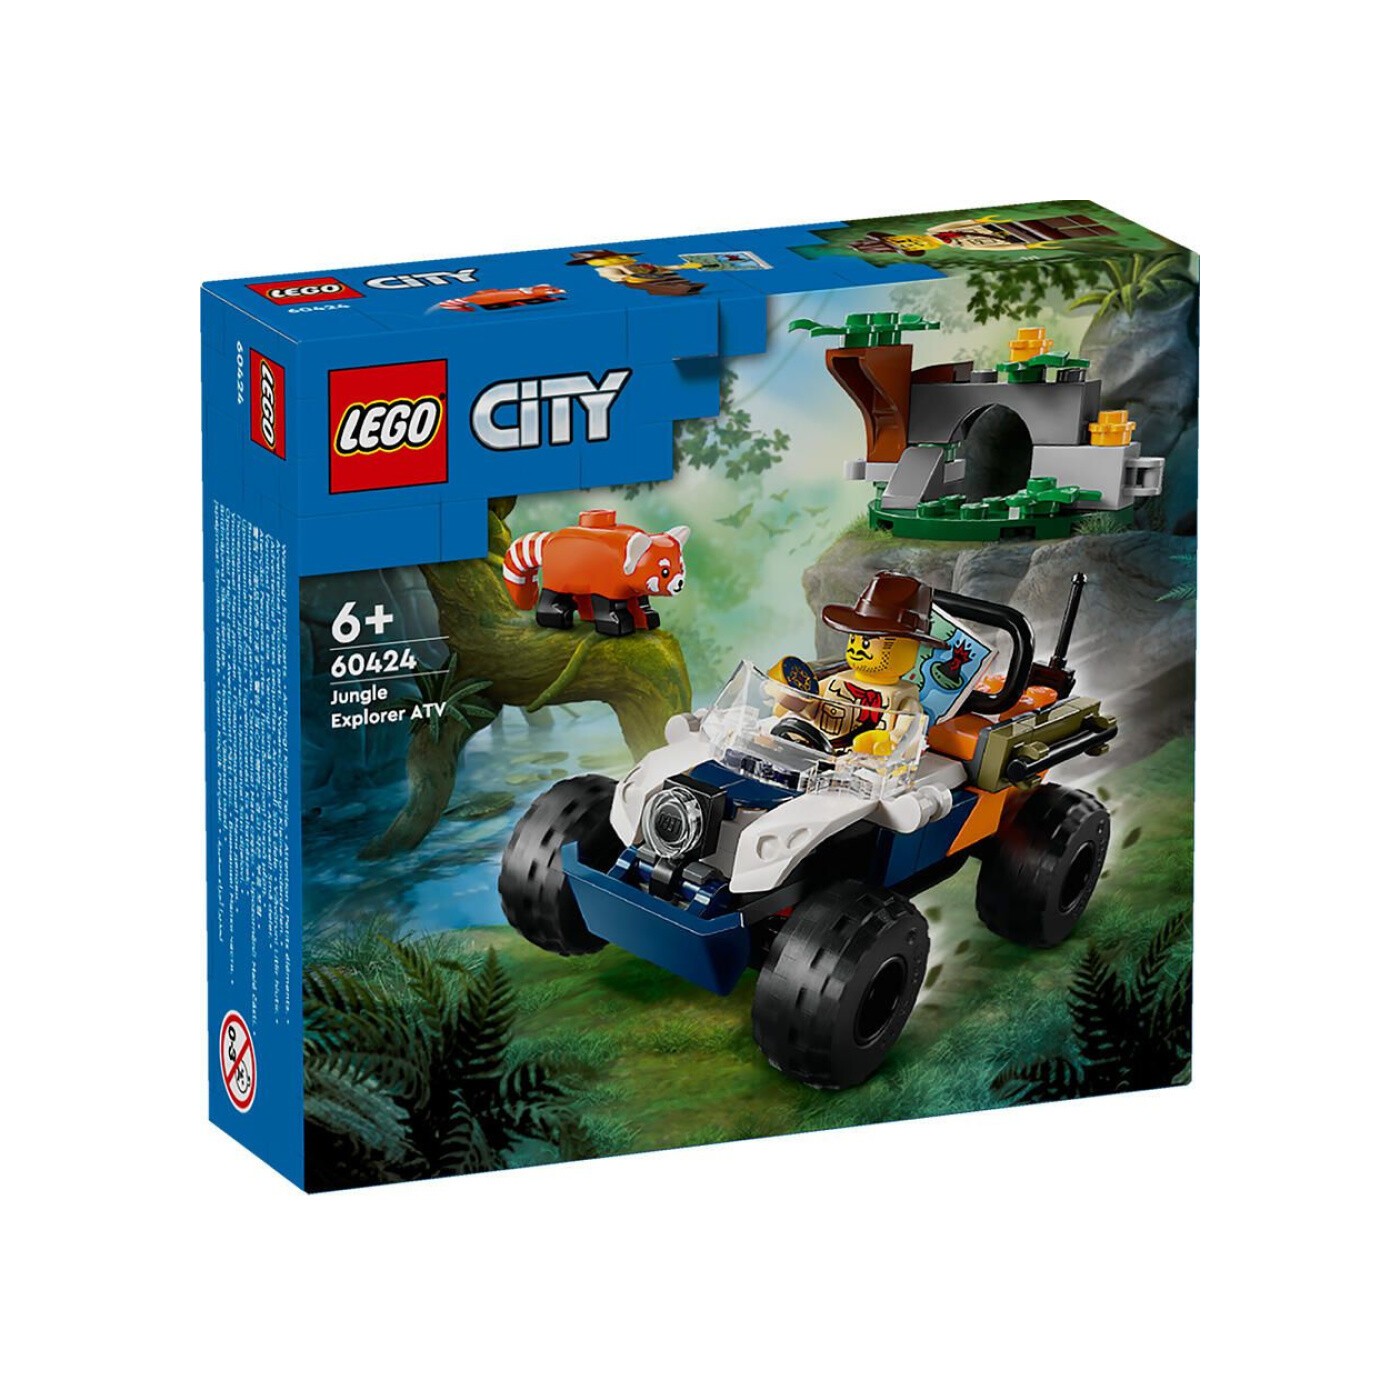 Lego City Jungle Explorer Atv Red Panda Mission (60424)